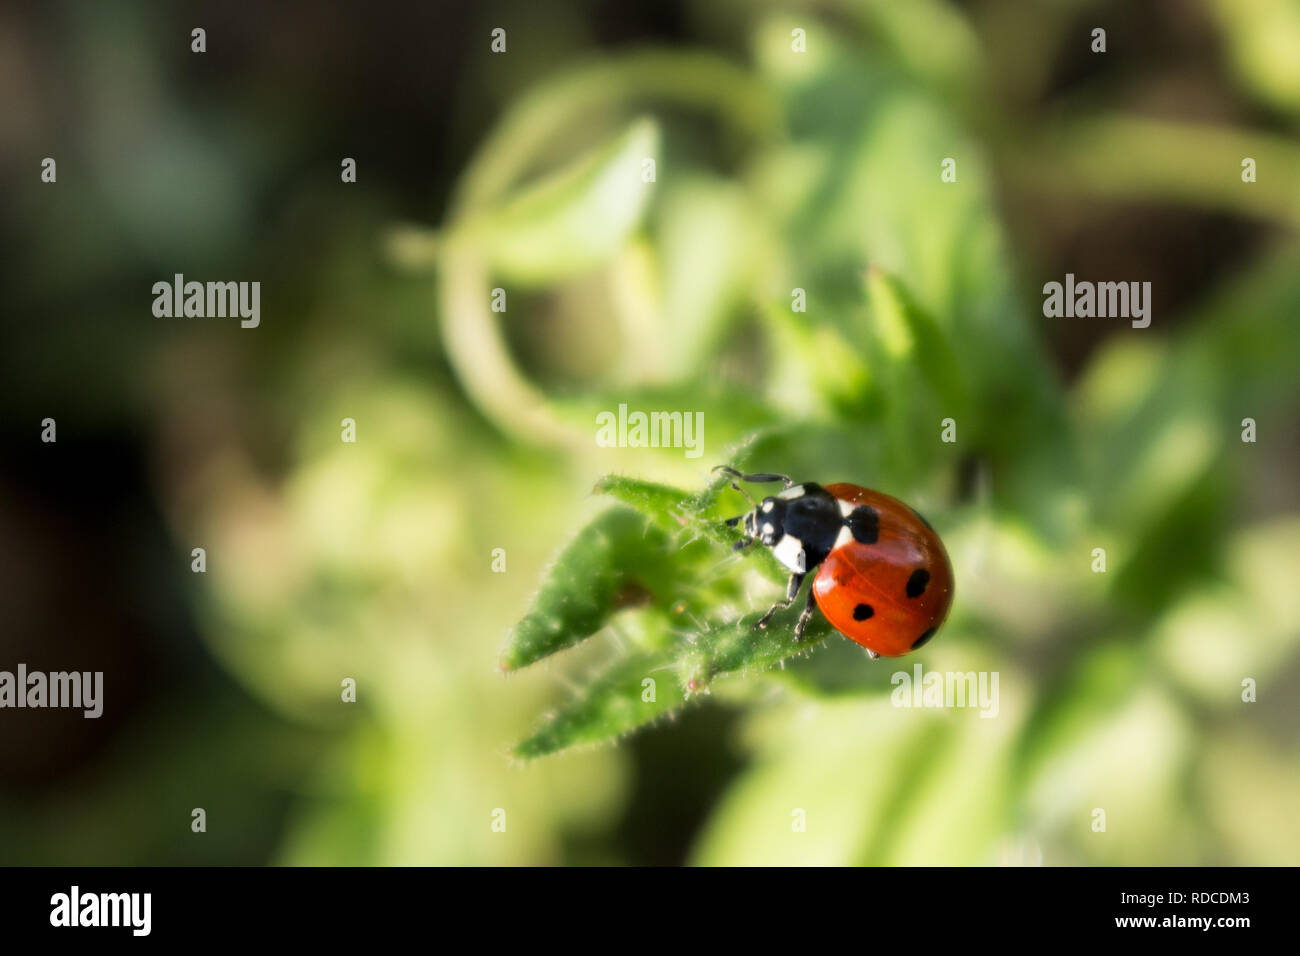 Macro photo of Ladybug in the green leaf Stock Photo